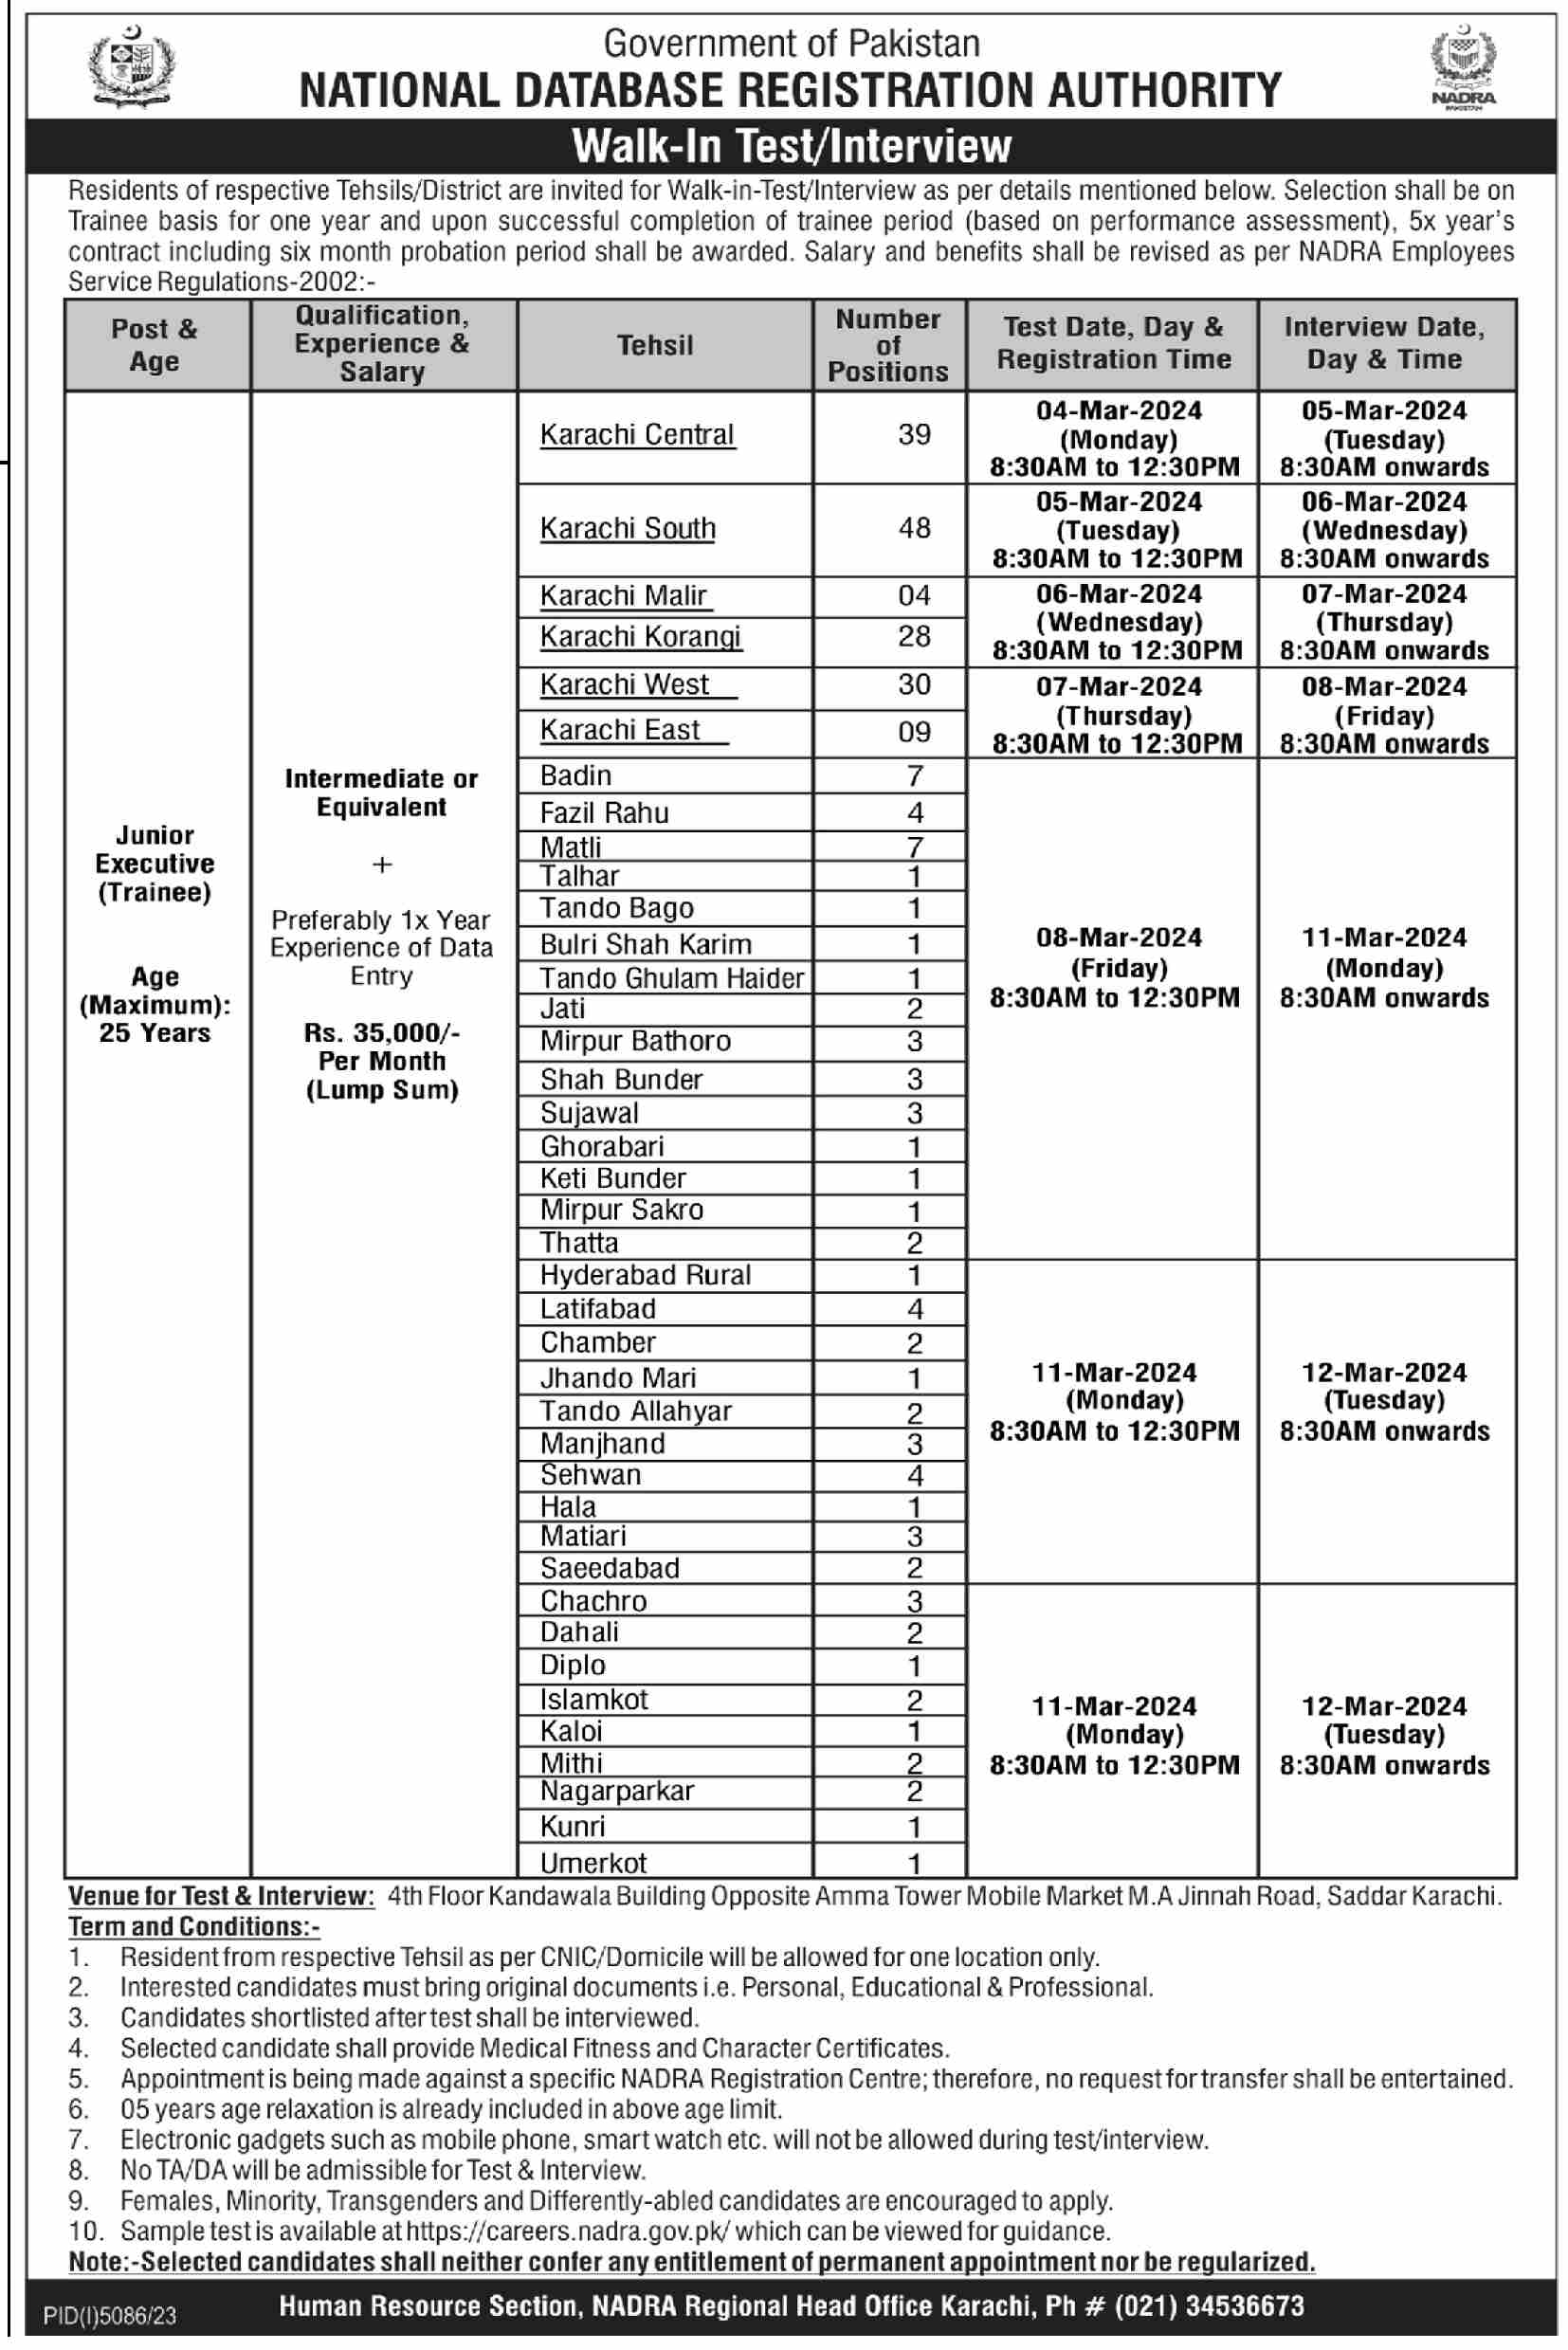 NADRA Jobs Across Pakistan